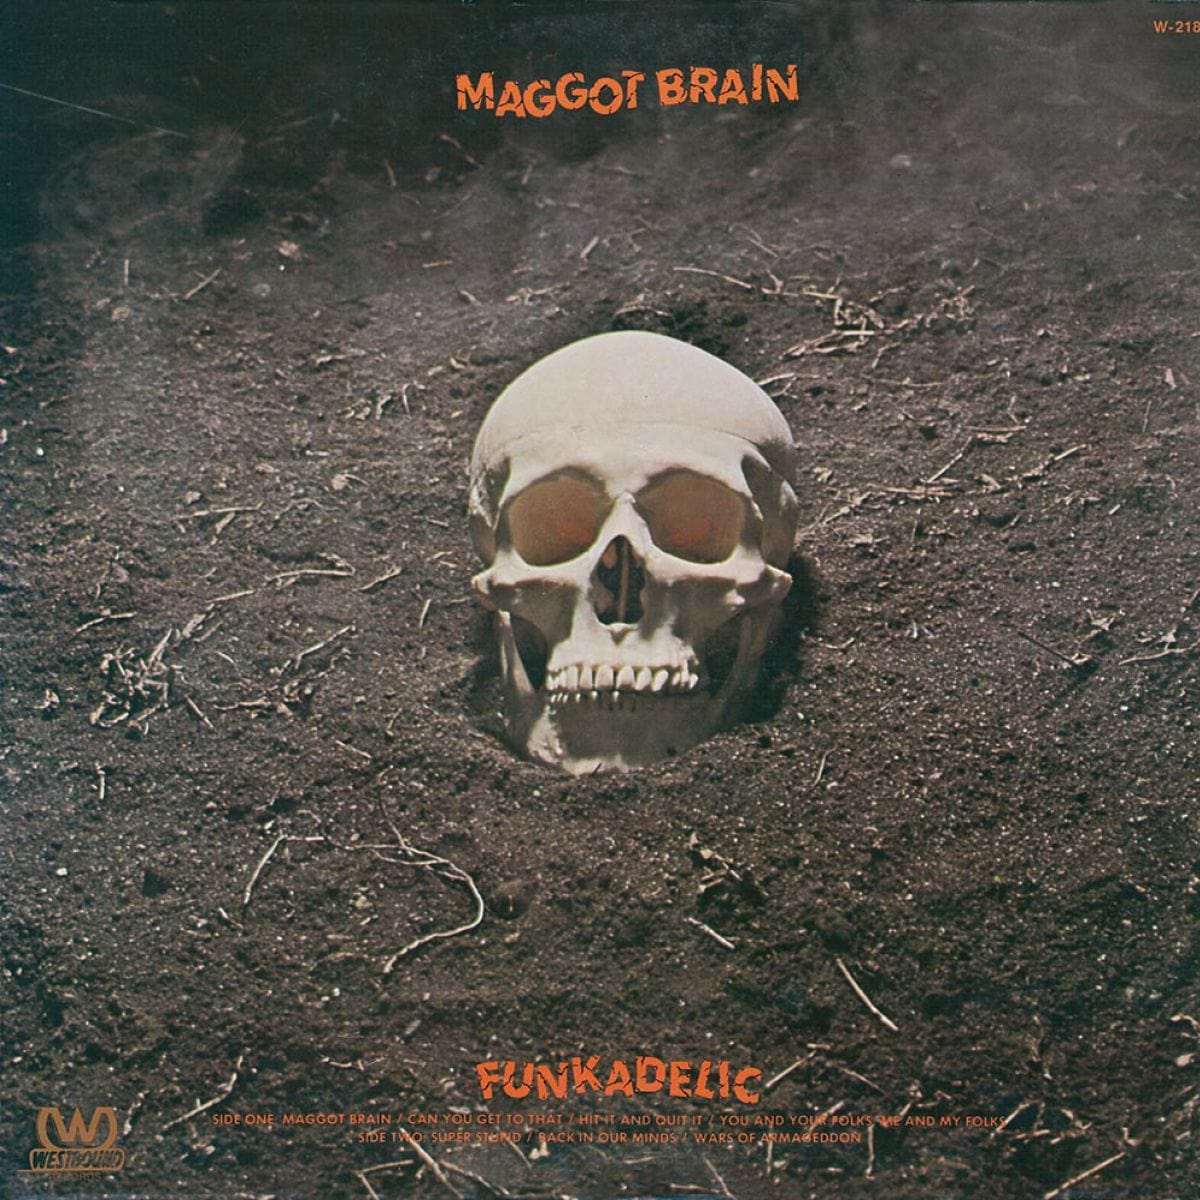 FUNKADELIC - Maggot Brain (180g) (Colored vinyl) LP